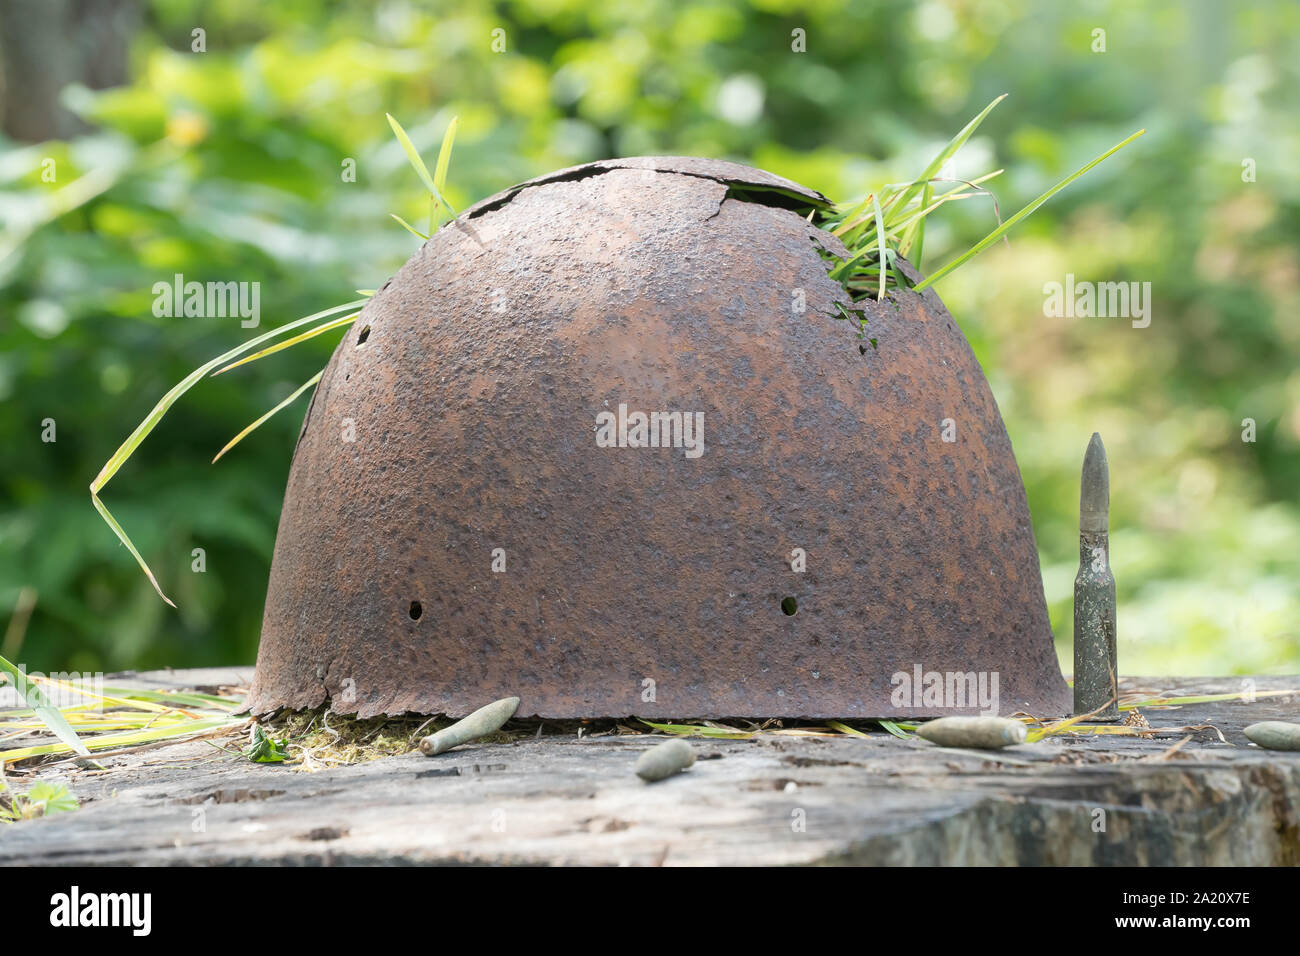 Leningrad Region, Russia - August 6, 2019 - a rusty Finnish battle helmet from World War II period excavated in Karelia, north of Saint Petersburg Stock Photo